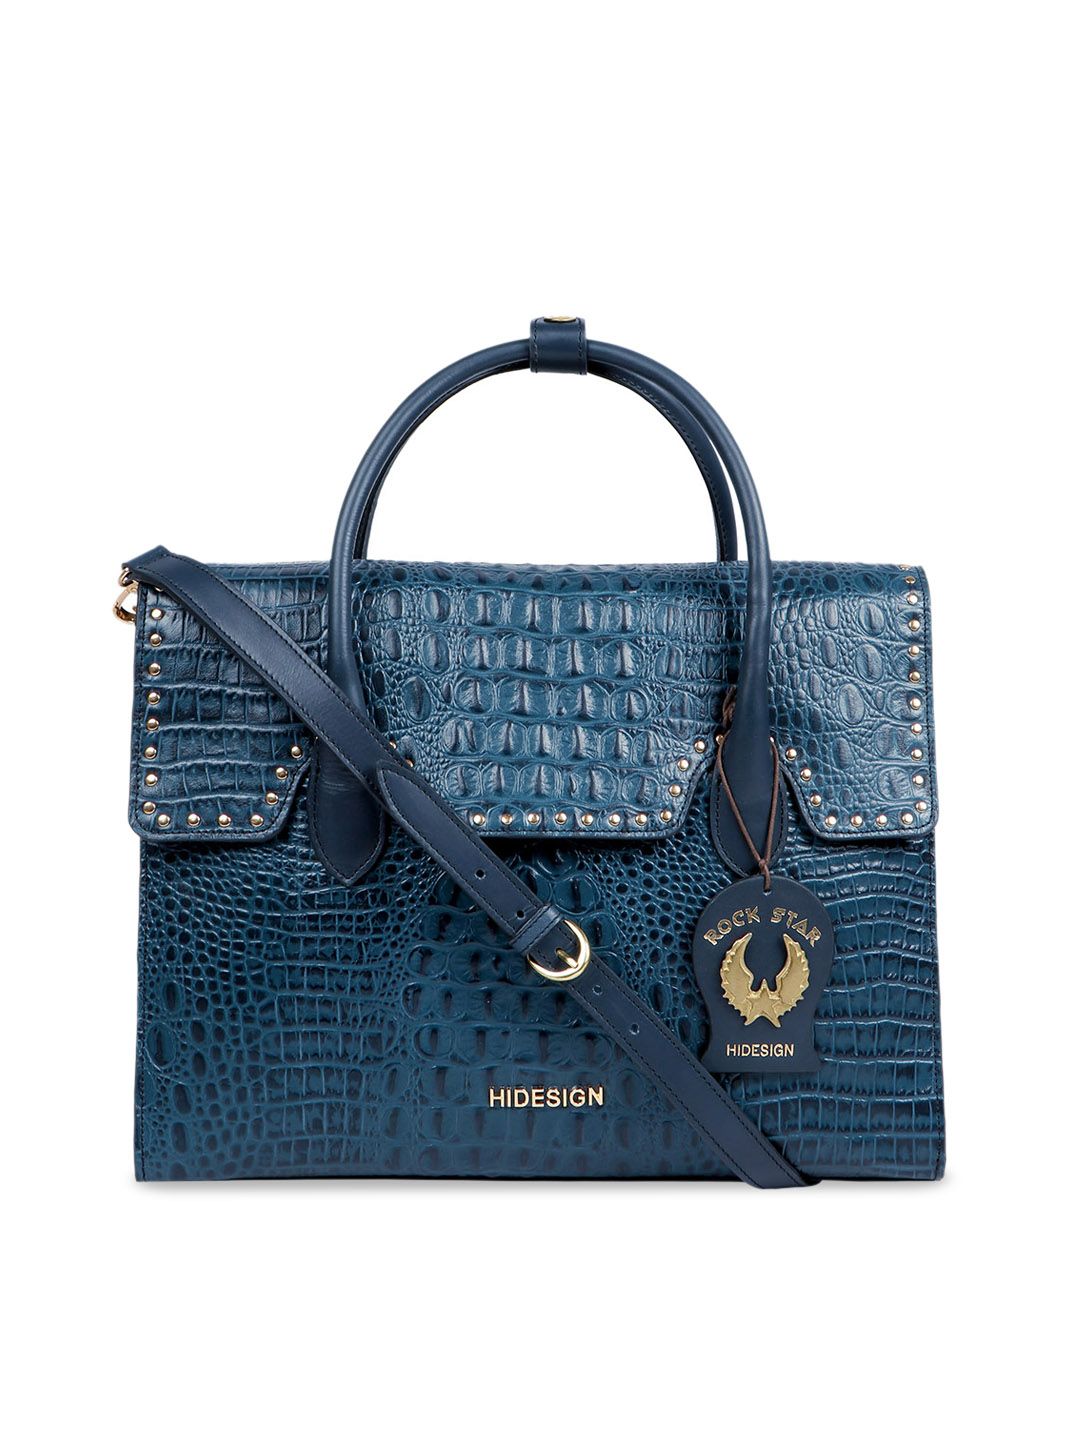 Hidesign Blue Crocodile Skin Textured Leather Handheld Bag Price in India